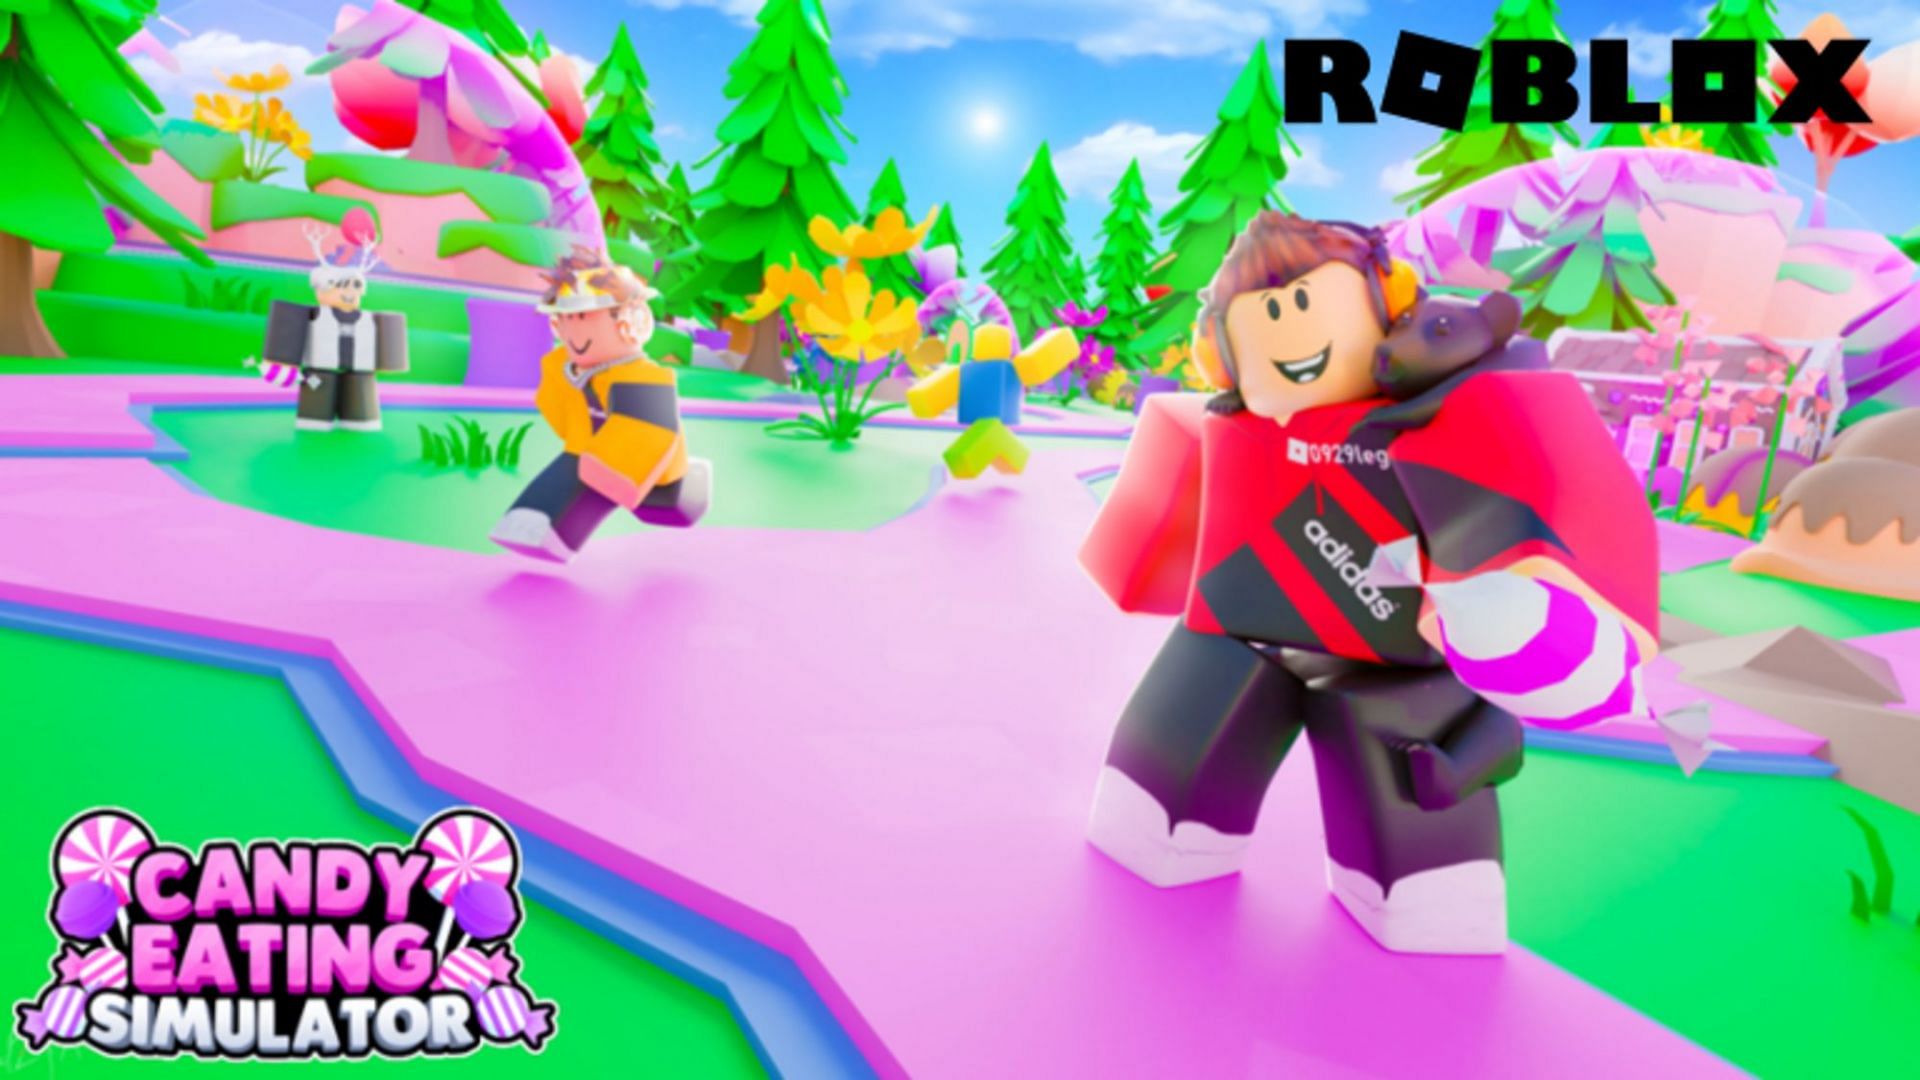 Roblox Candy Eating Simulator codes to redeem free rewards (Image via Roblox)